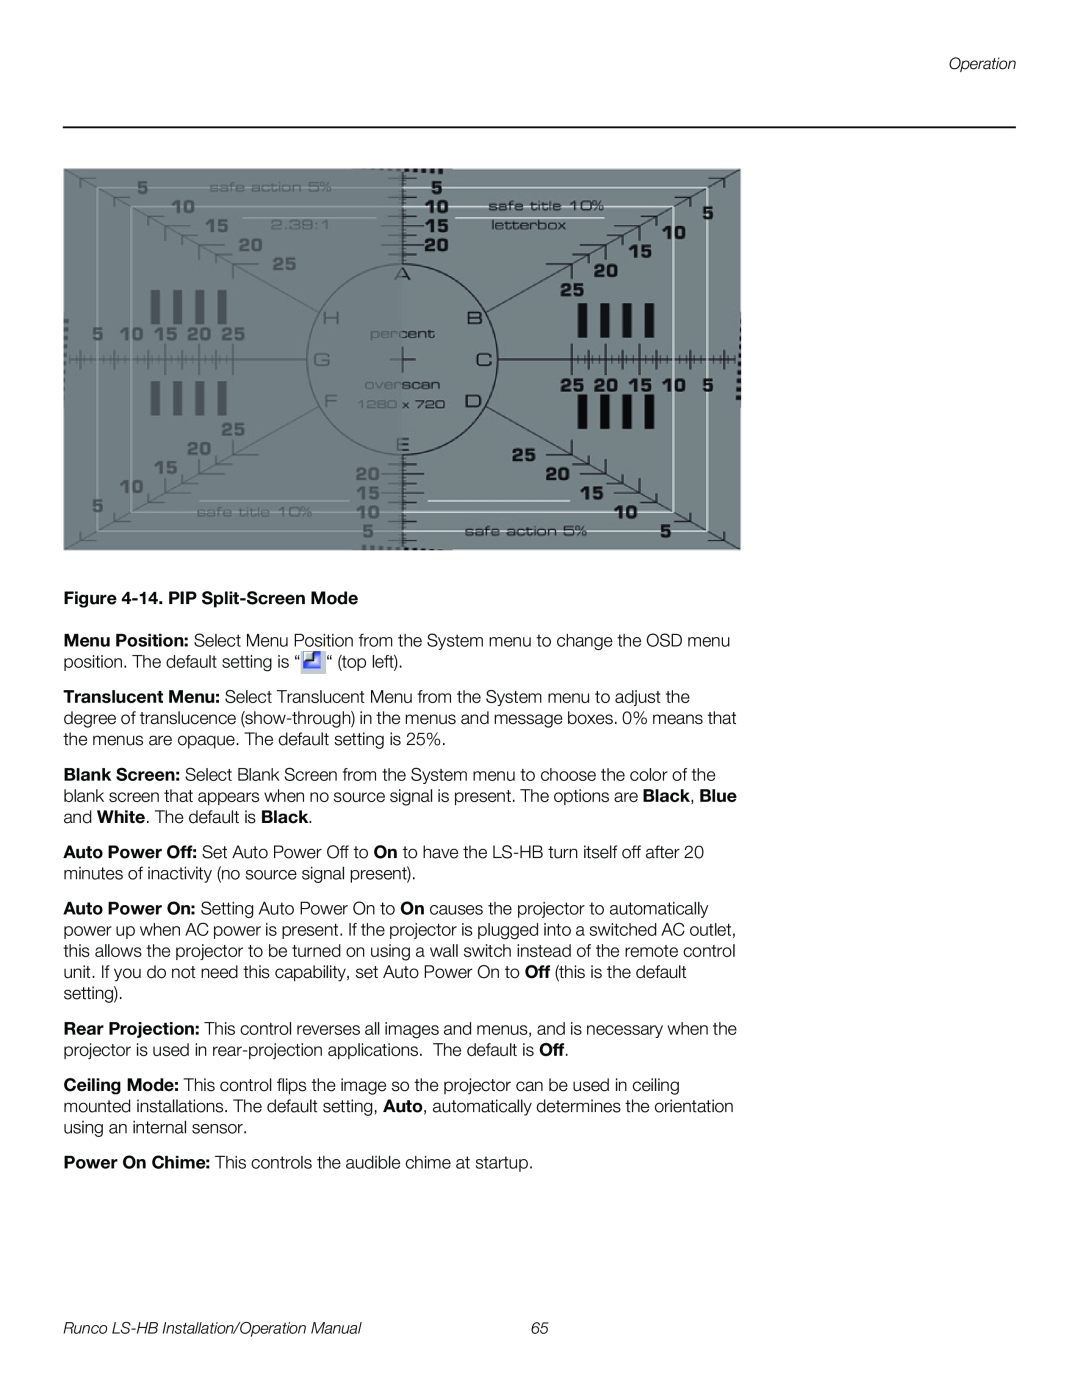 Runco LS-HB operation manual 14. PIP Split-Screen Mode 